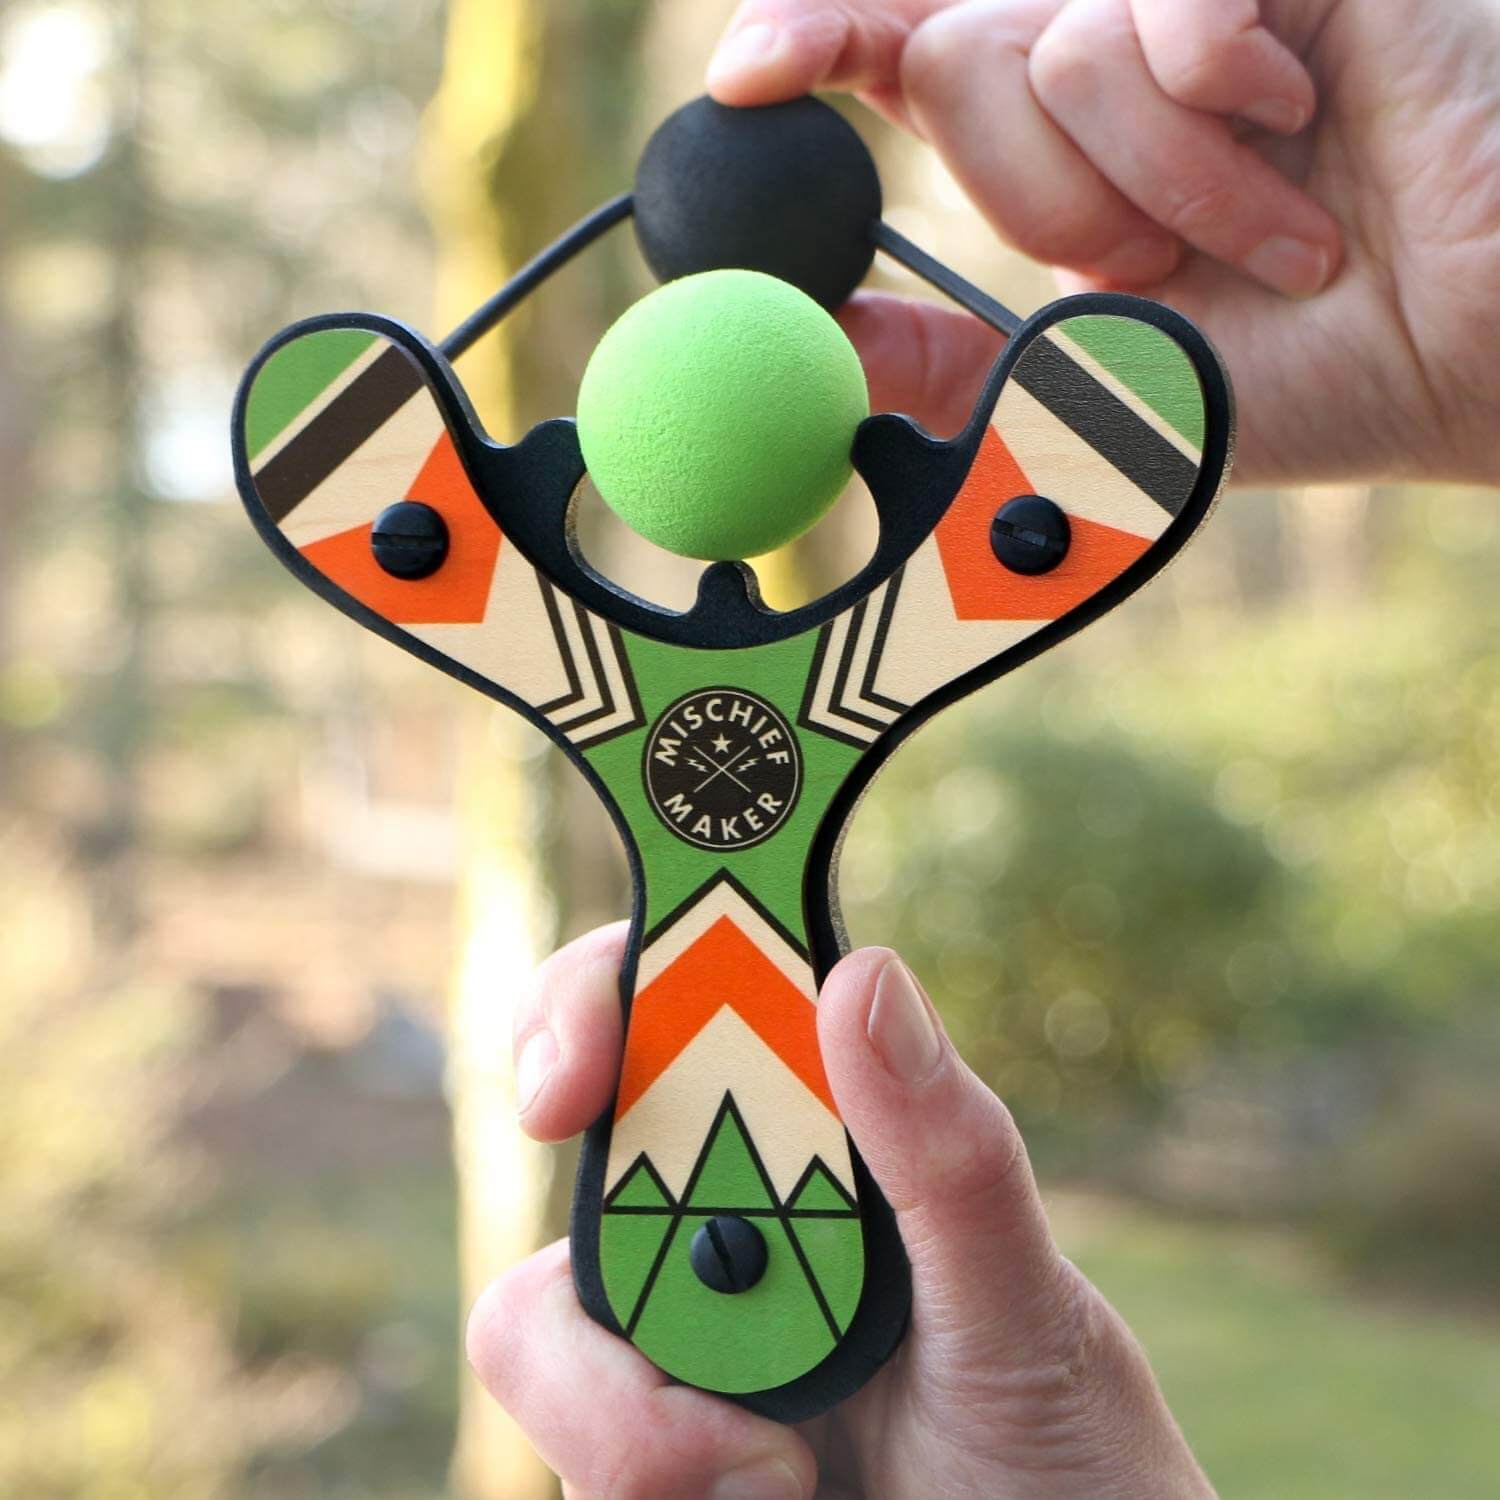 Mighty Fun Mischief Maker Green Slingshot with 4 Balls